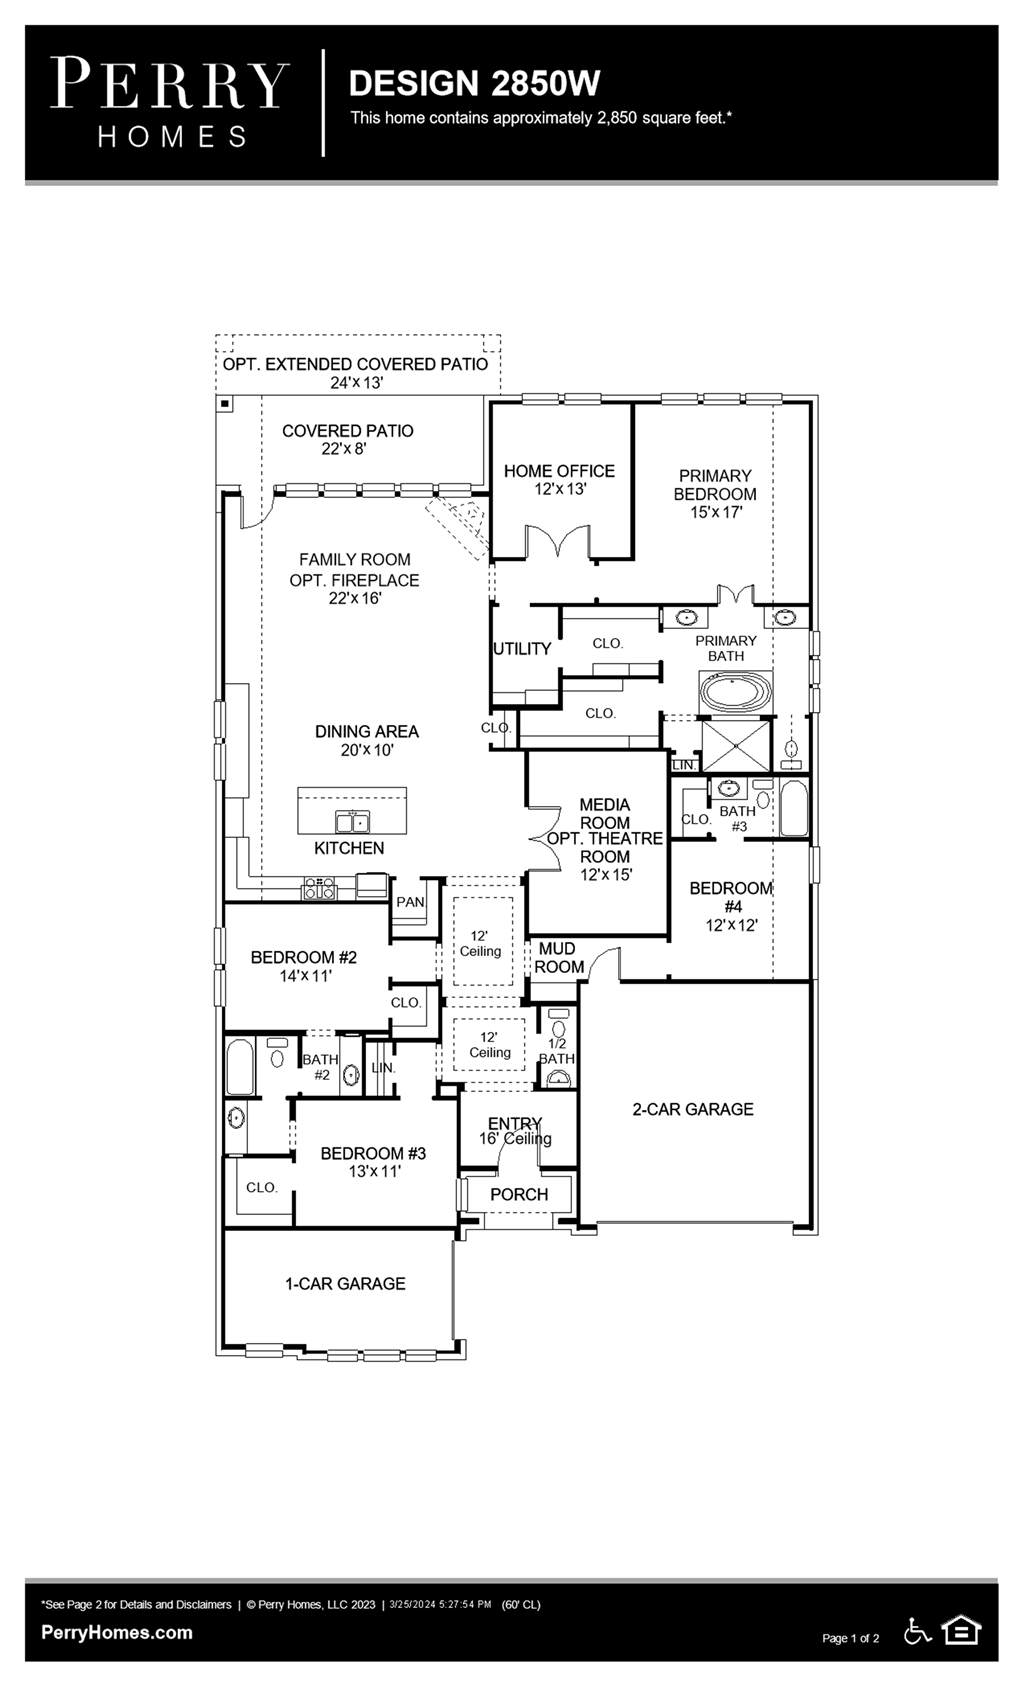 Floor Plan for 2850W